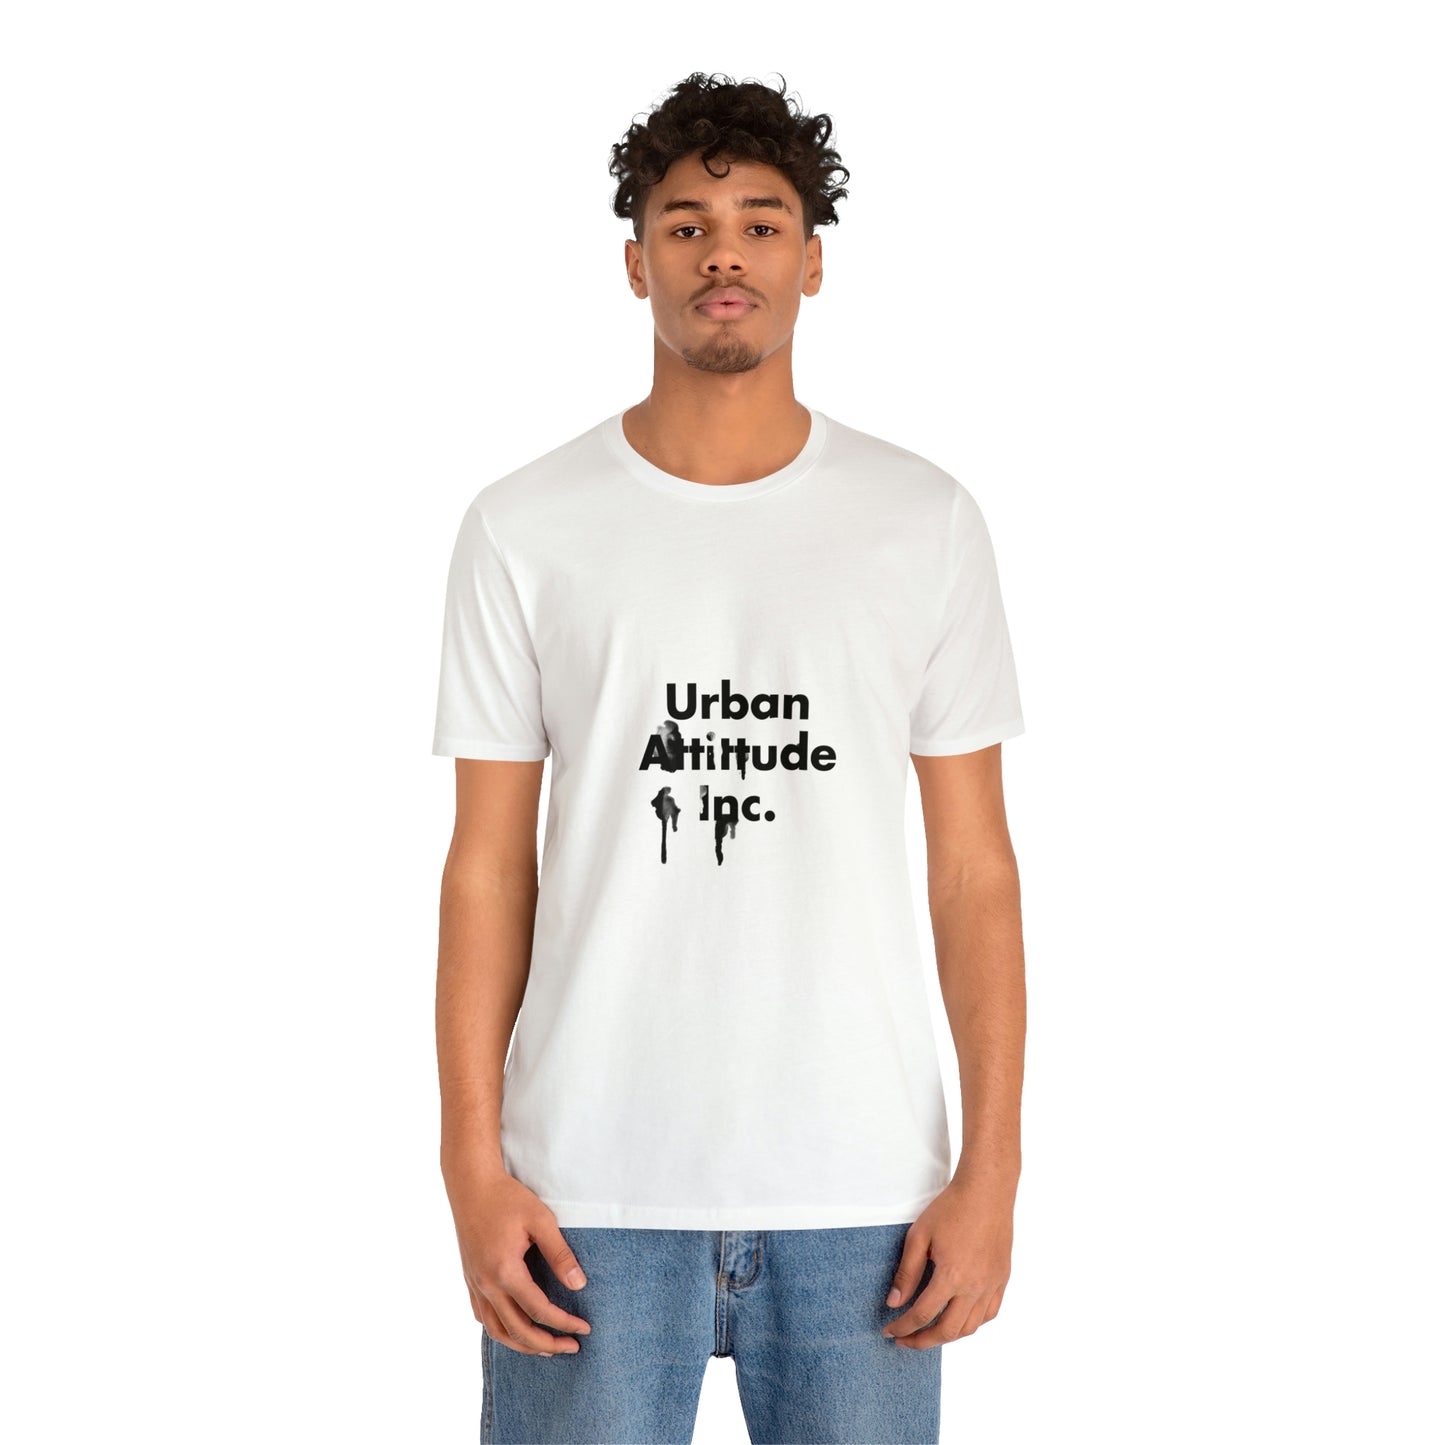 Urban Attitude Inc.